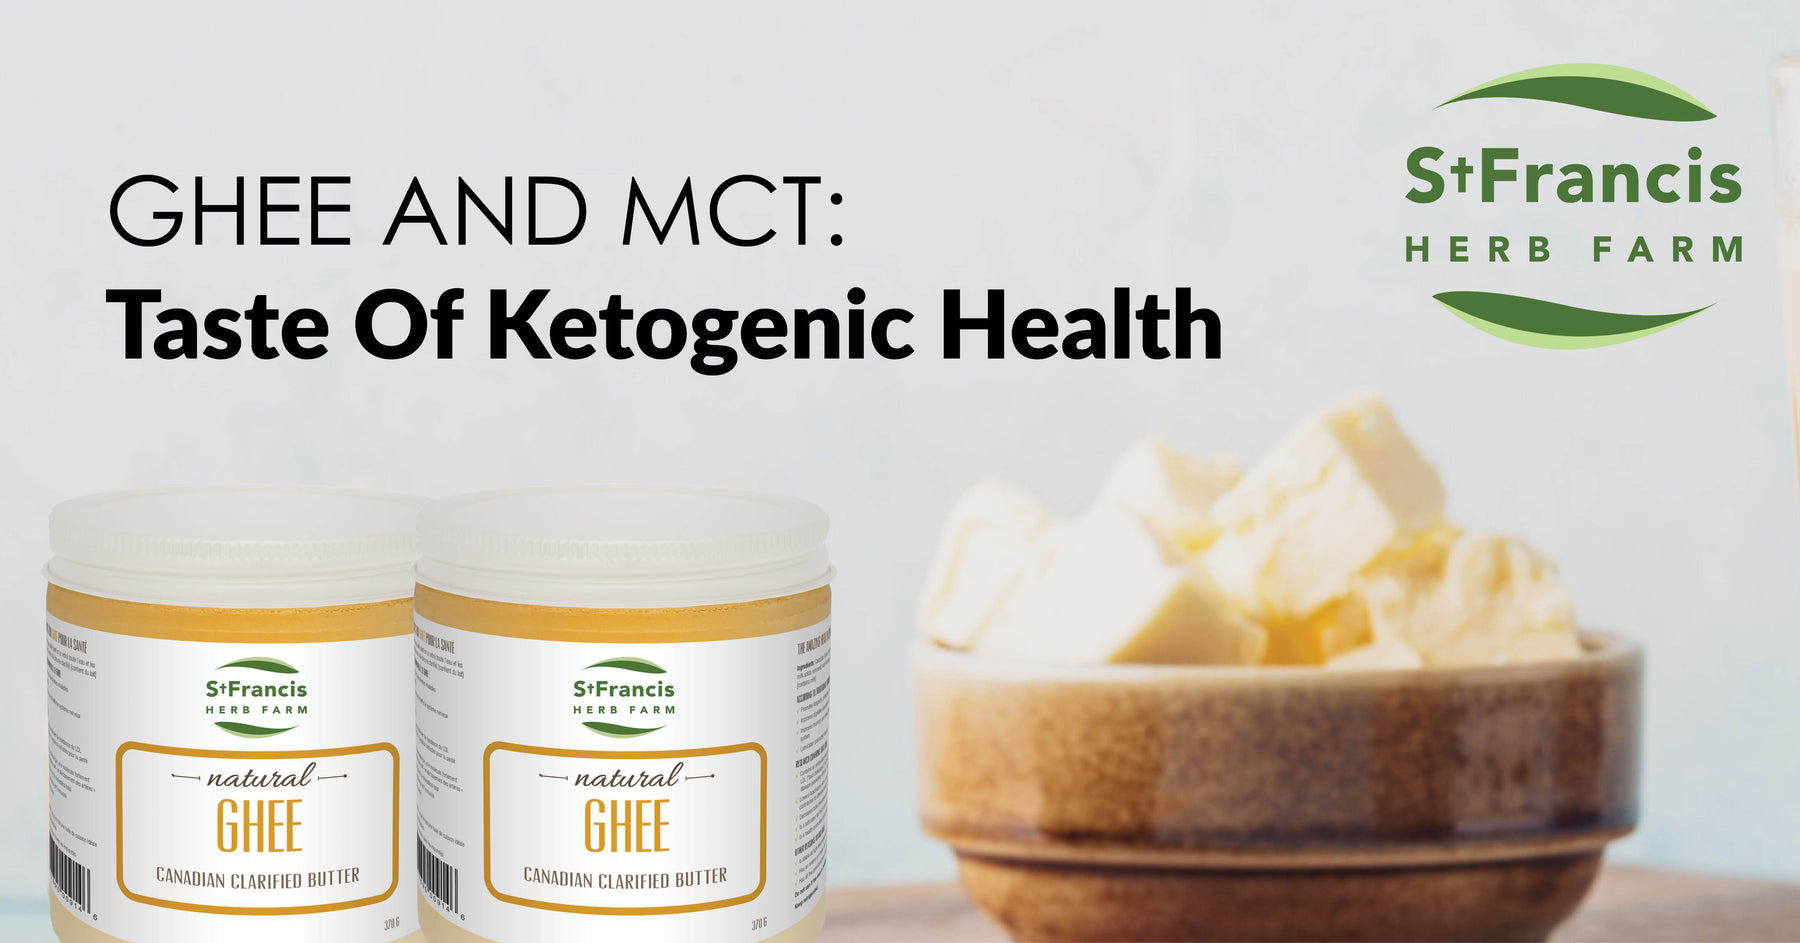 Ghee & MCT - The Taste Of Ketogenic Health